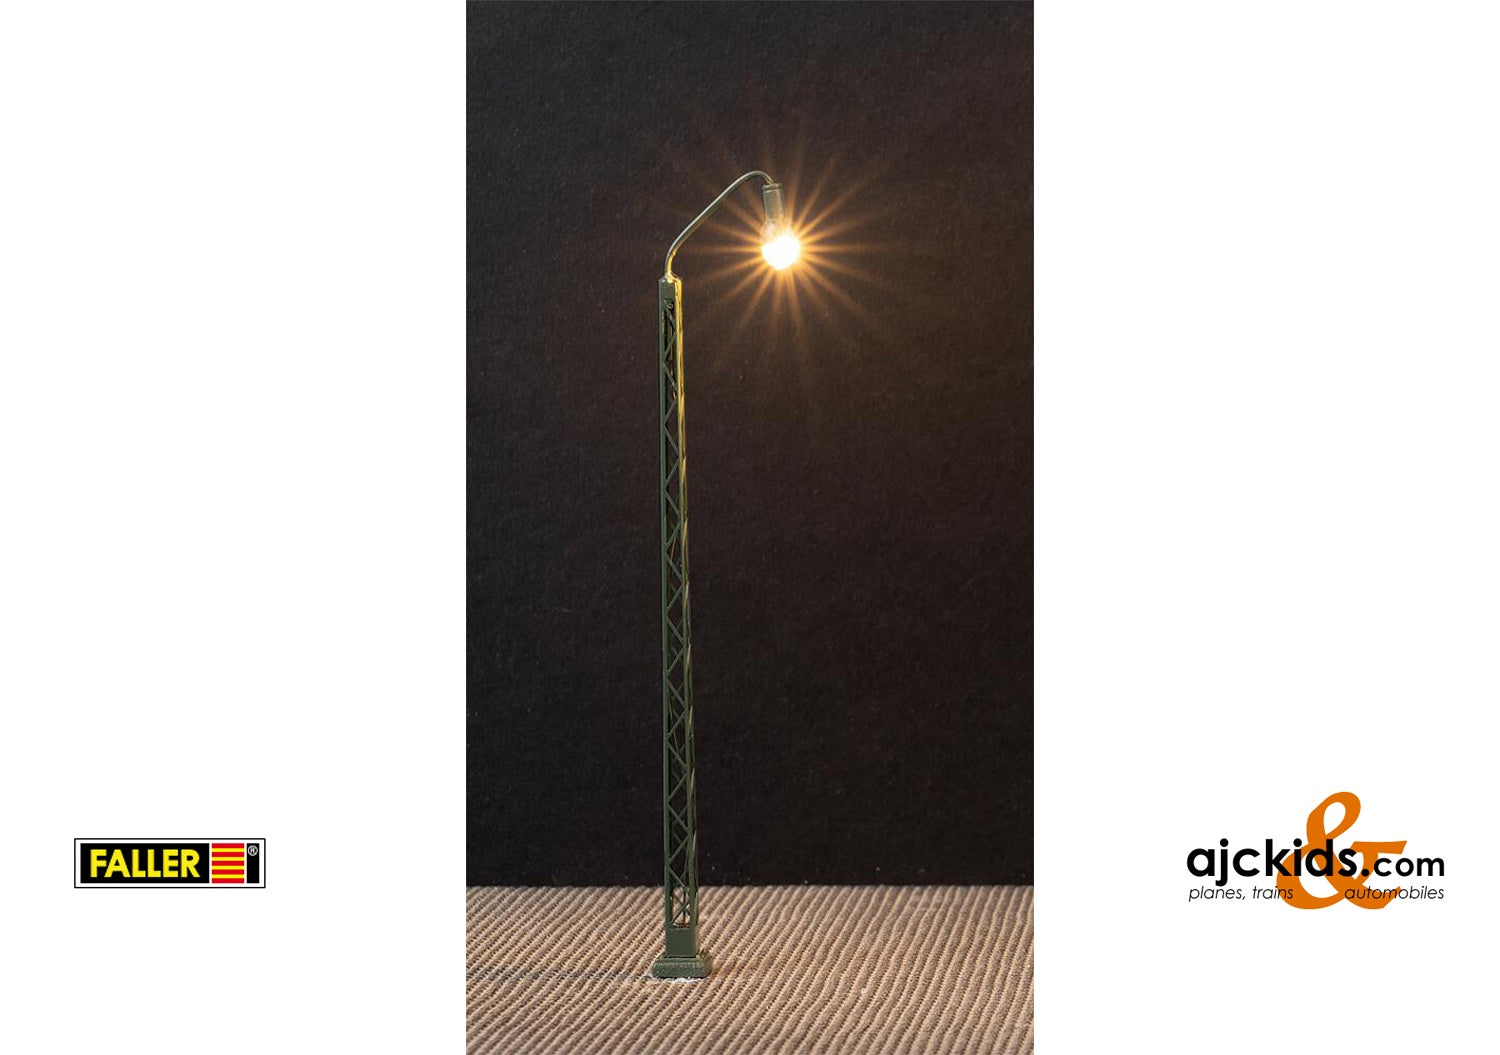 Faller 272224 - LED Lattice mast arc luminaire